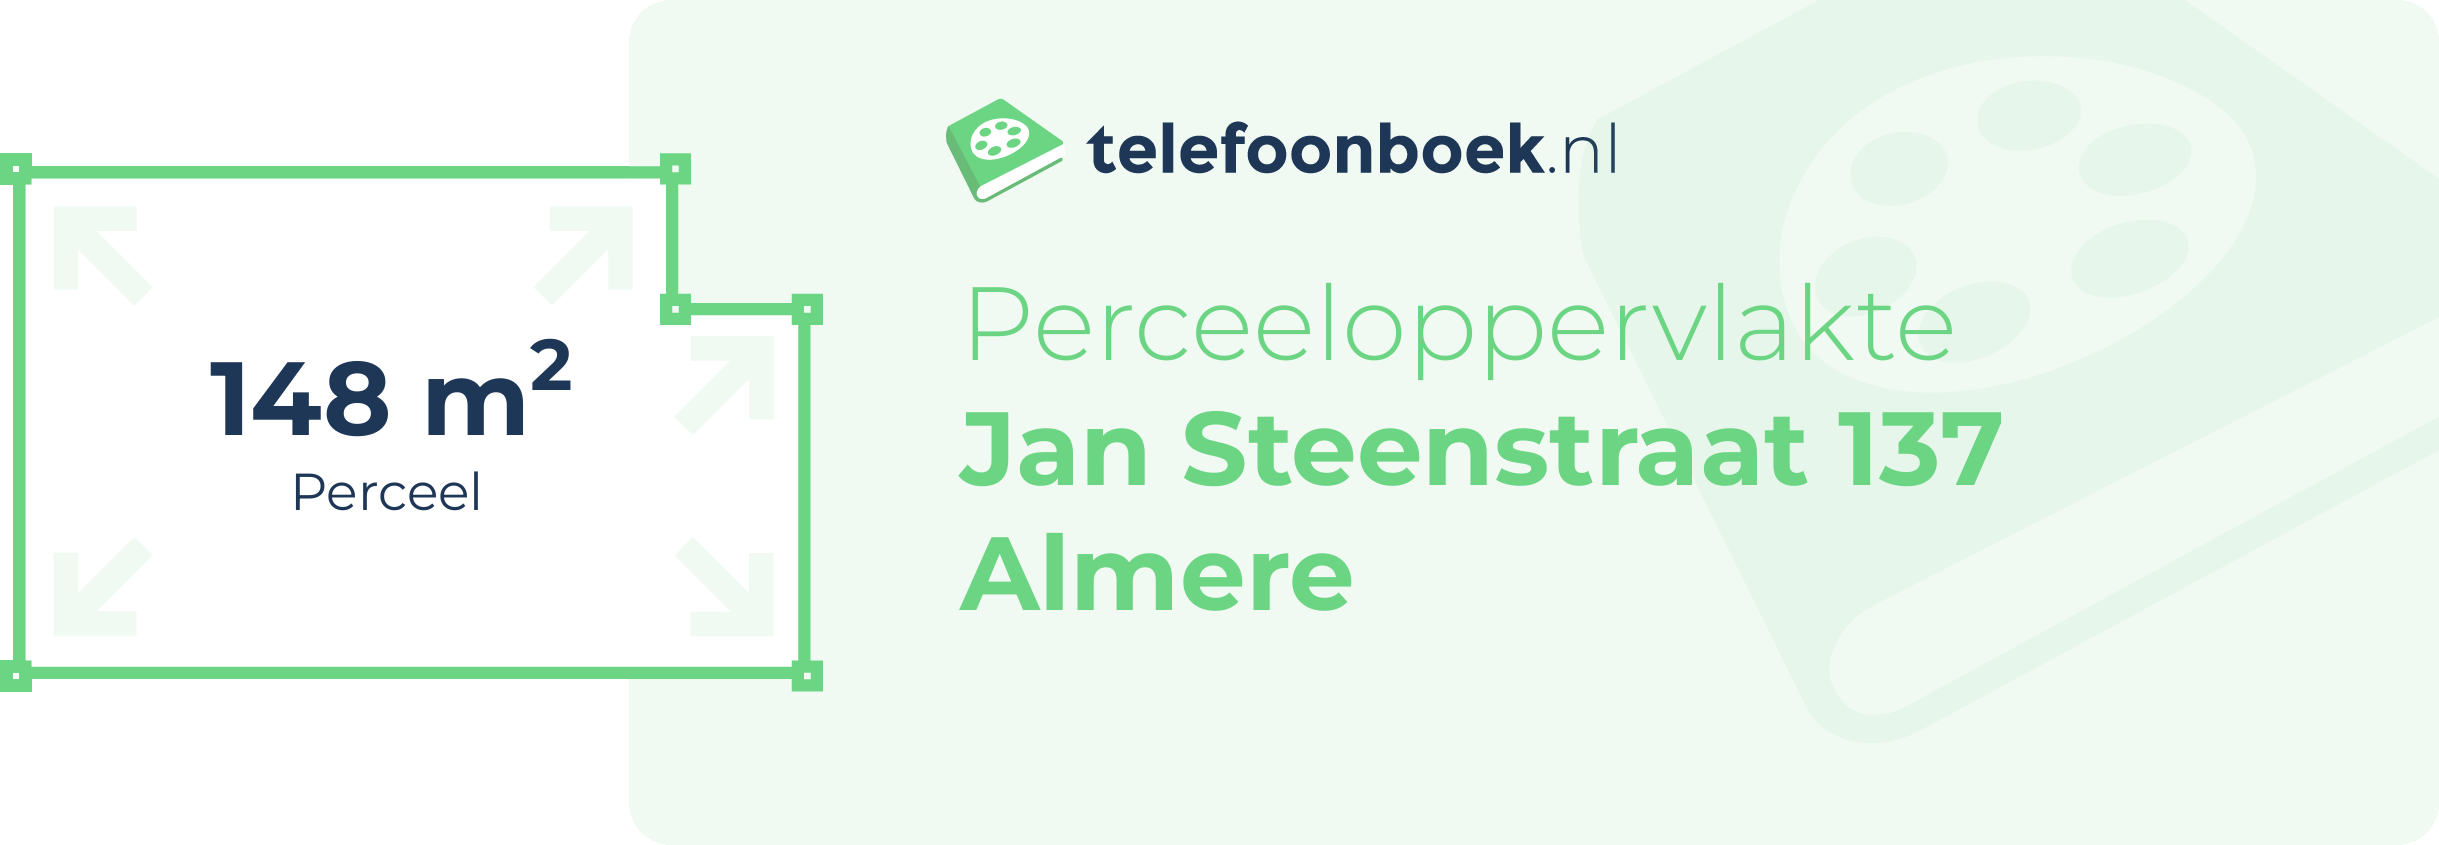 Perceeloppervlakte Jan Steenstraat 137 Almere